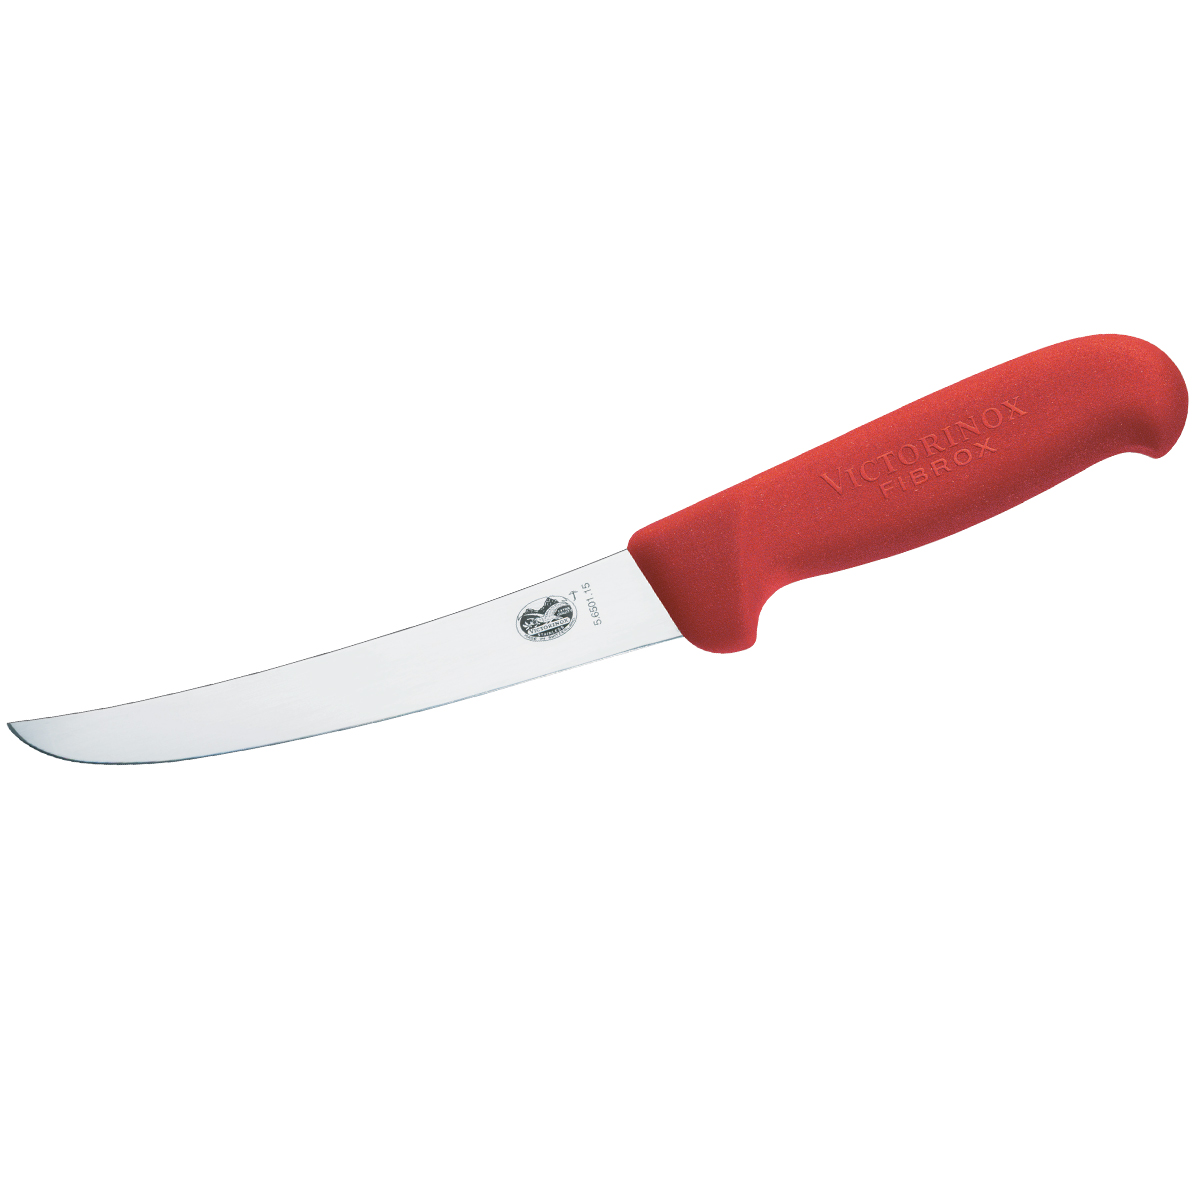 Victorinox Boning Knife, 15cm (6) - Curved, Wide Blade - Red